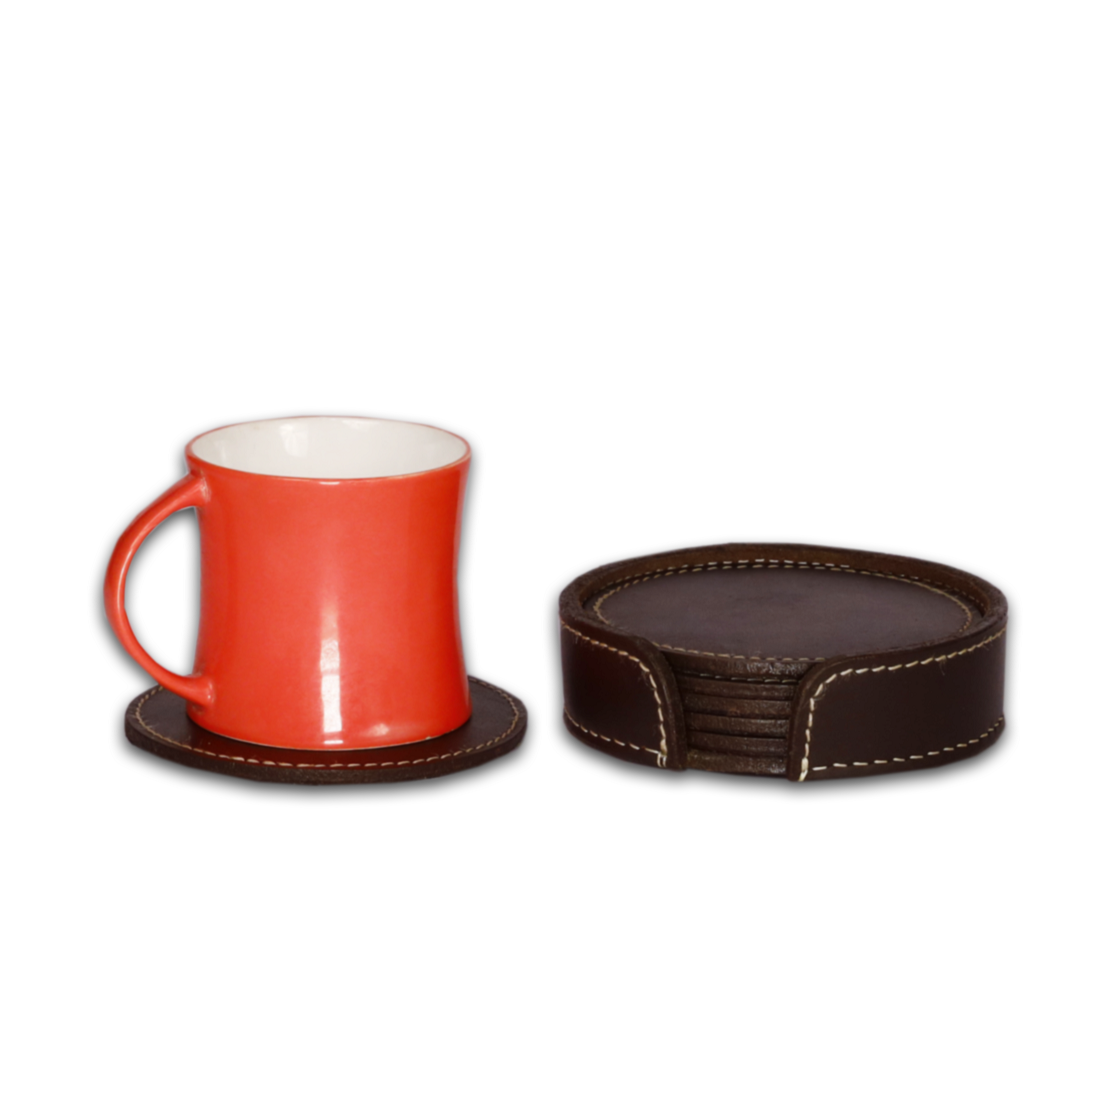 Leather Brown Round Tea Coaster